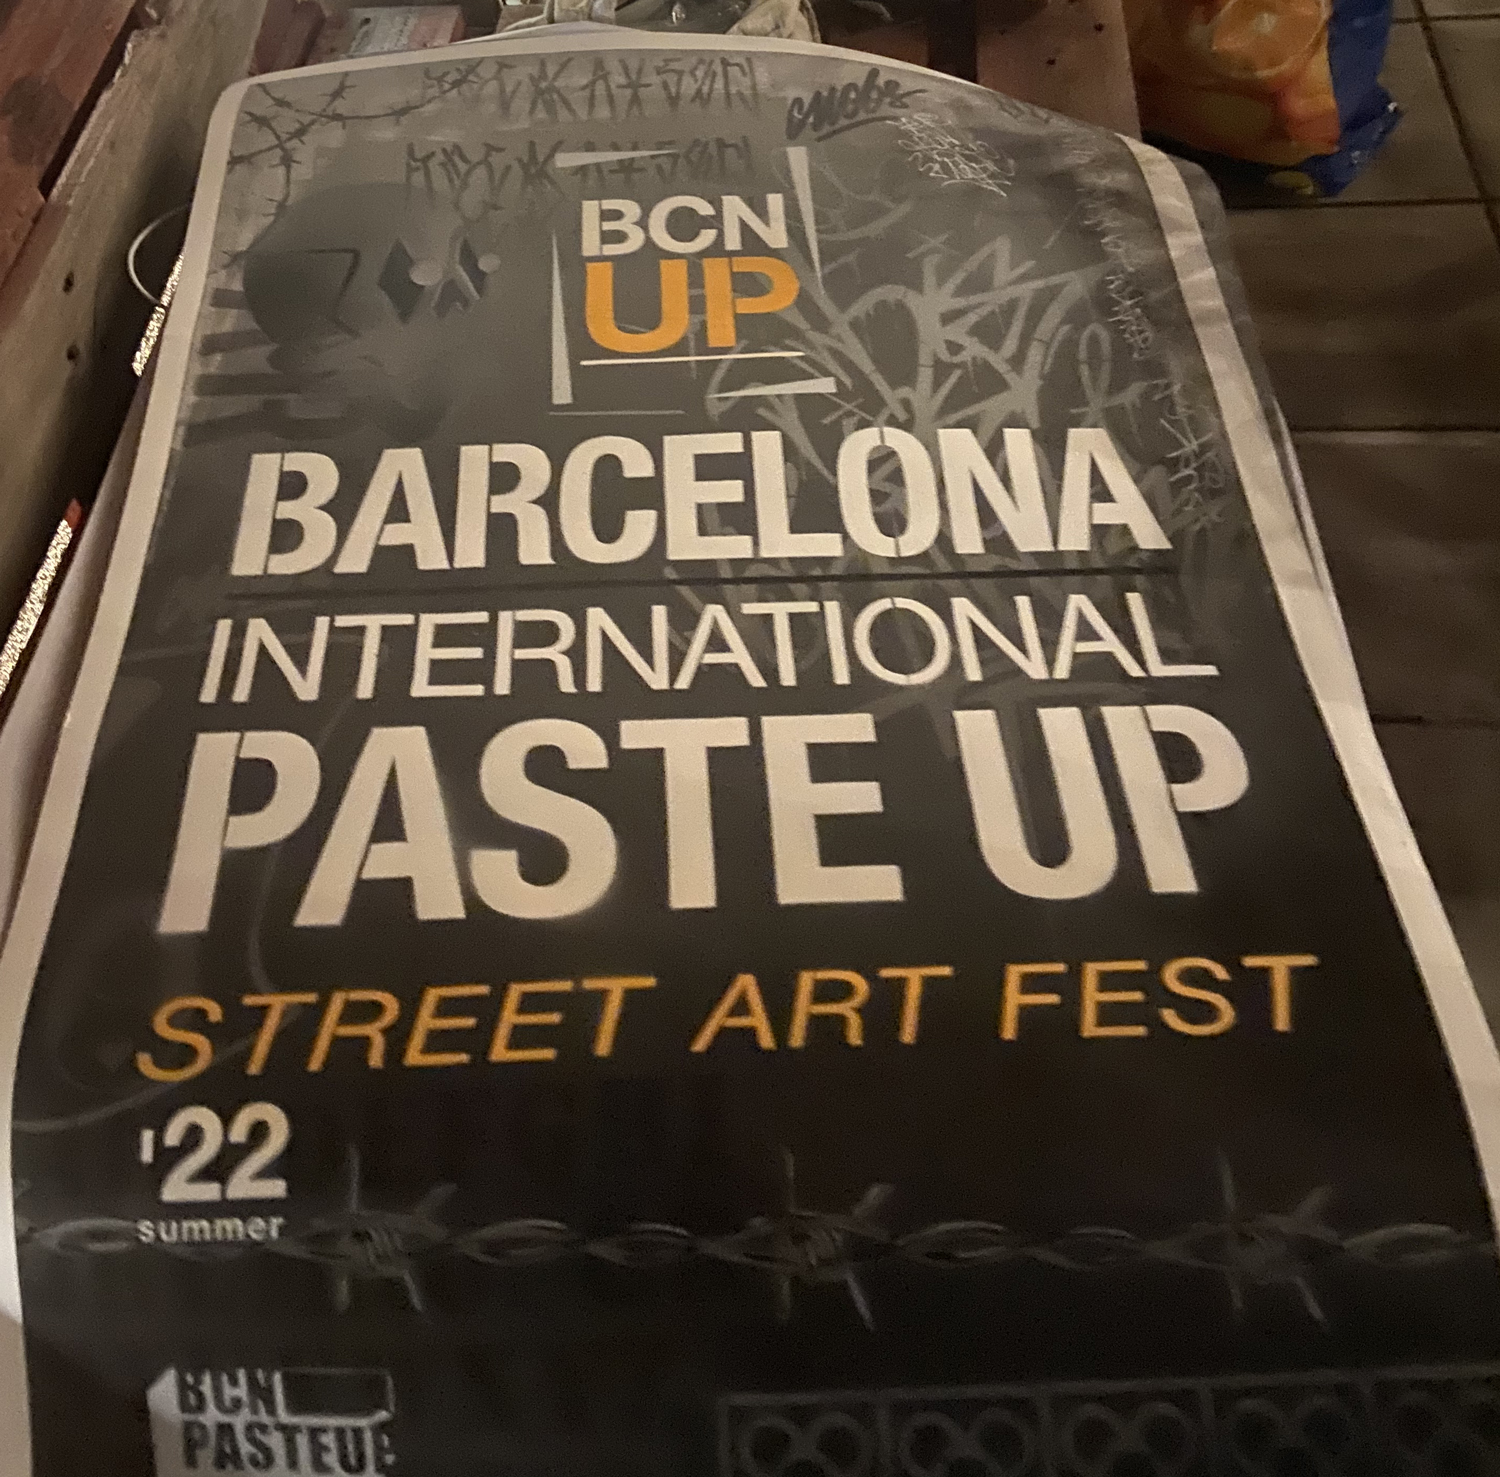 arte urbano festival de paste up en Barcelona